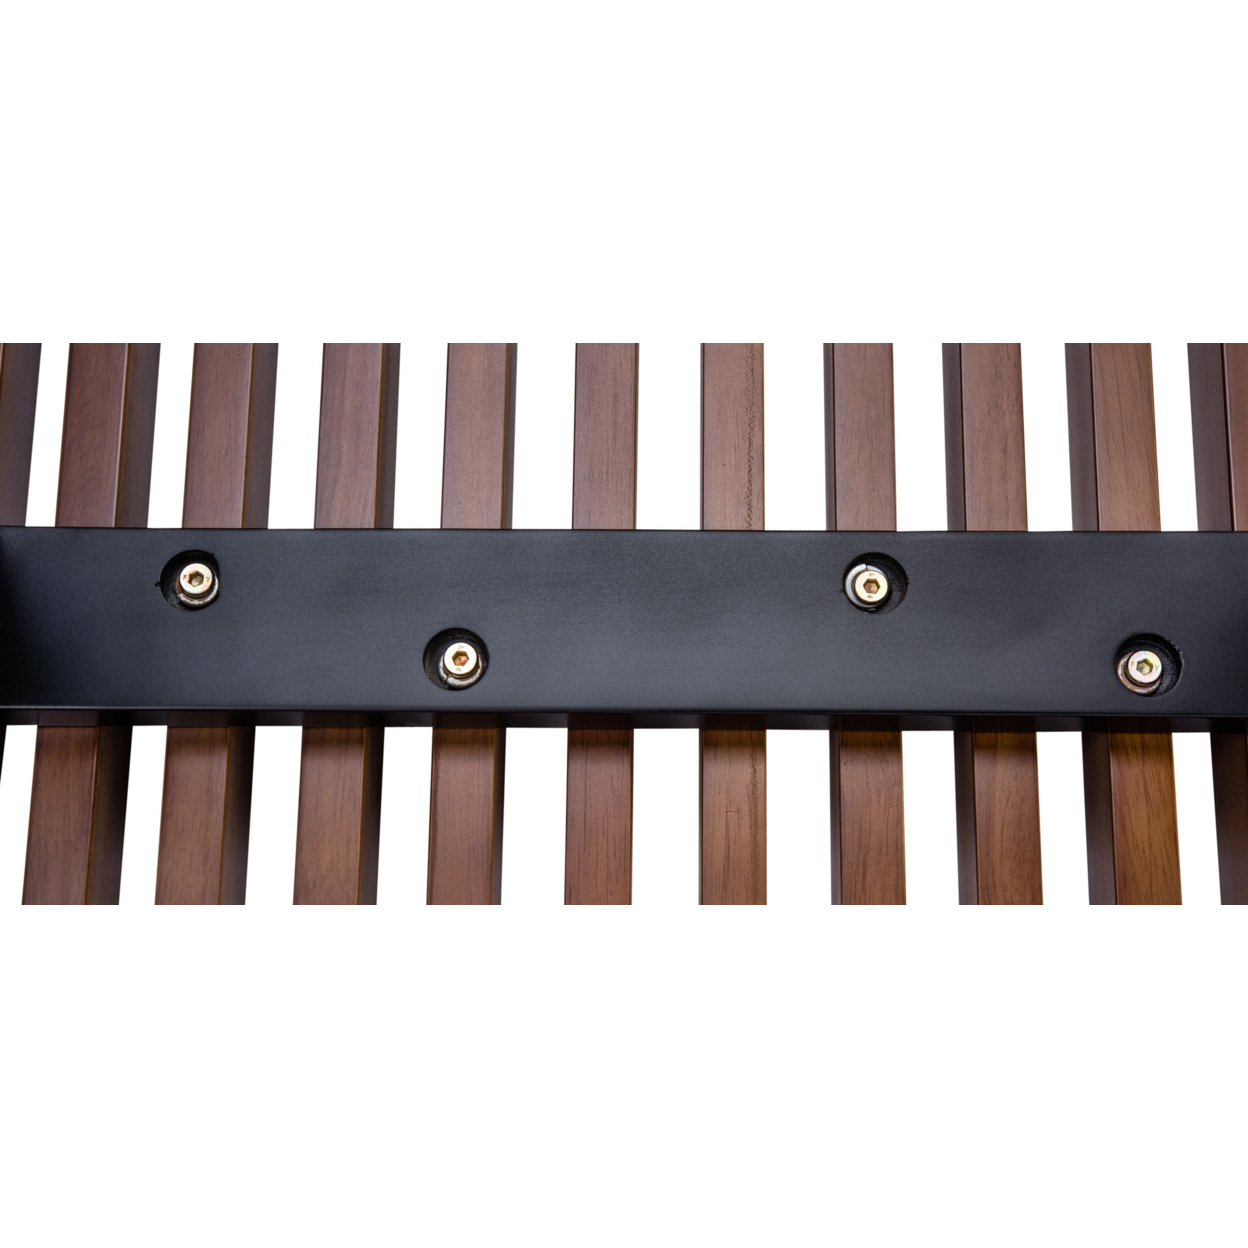 LeisureMod Mid-Century Inwood Platform Bench in Dark Walnut - 6 Feet - image 4 of 7